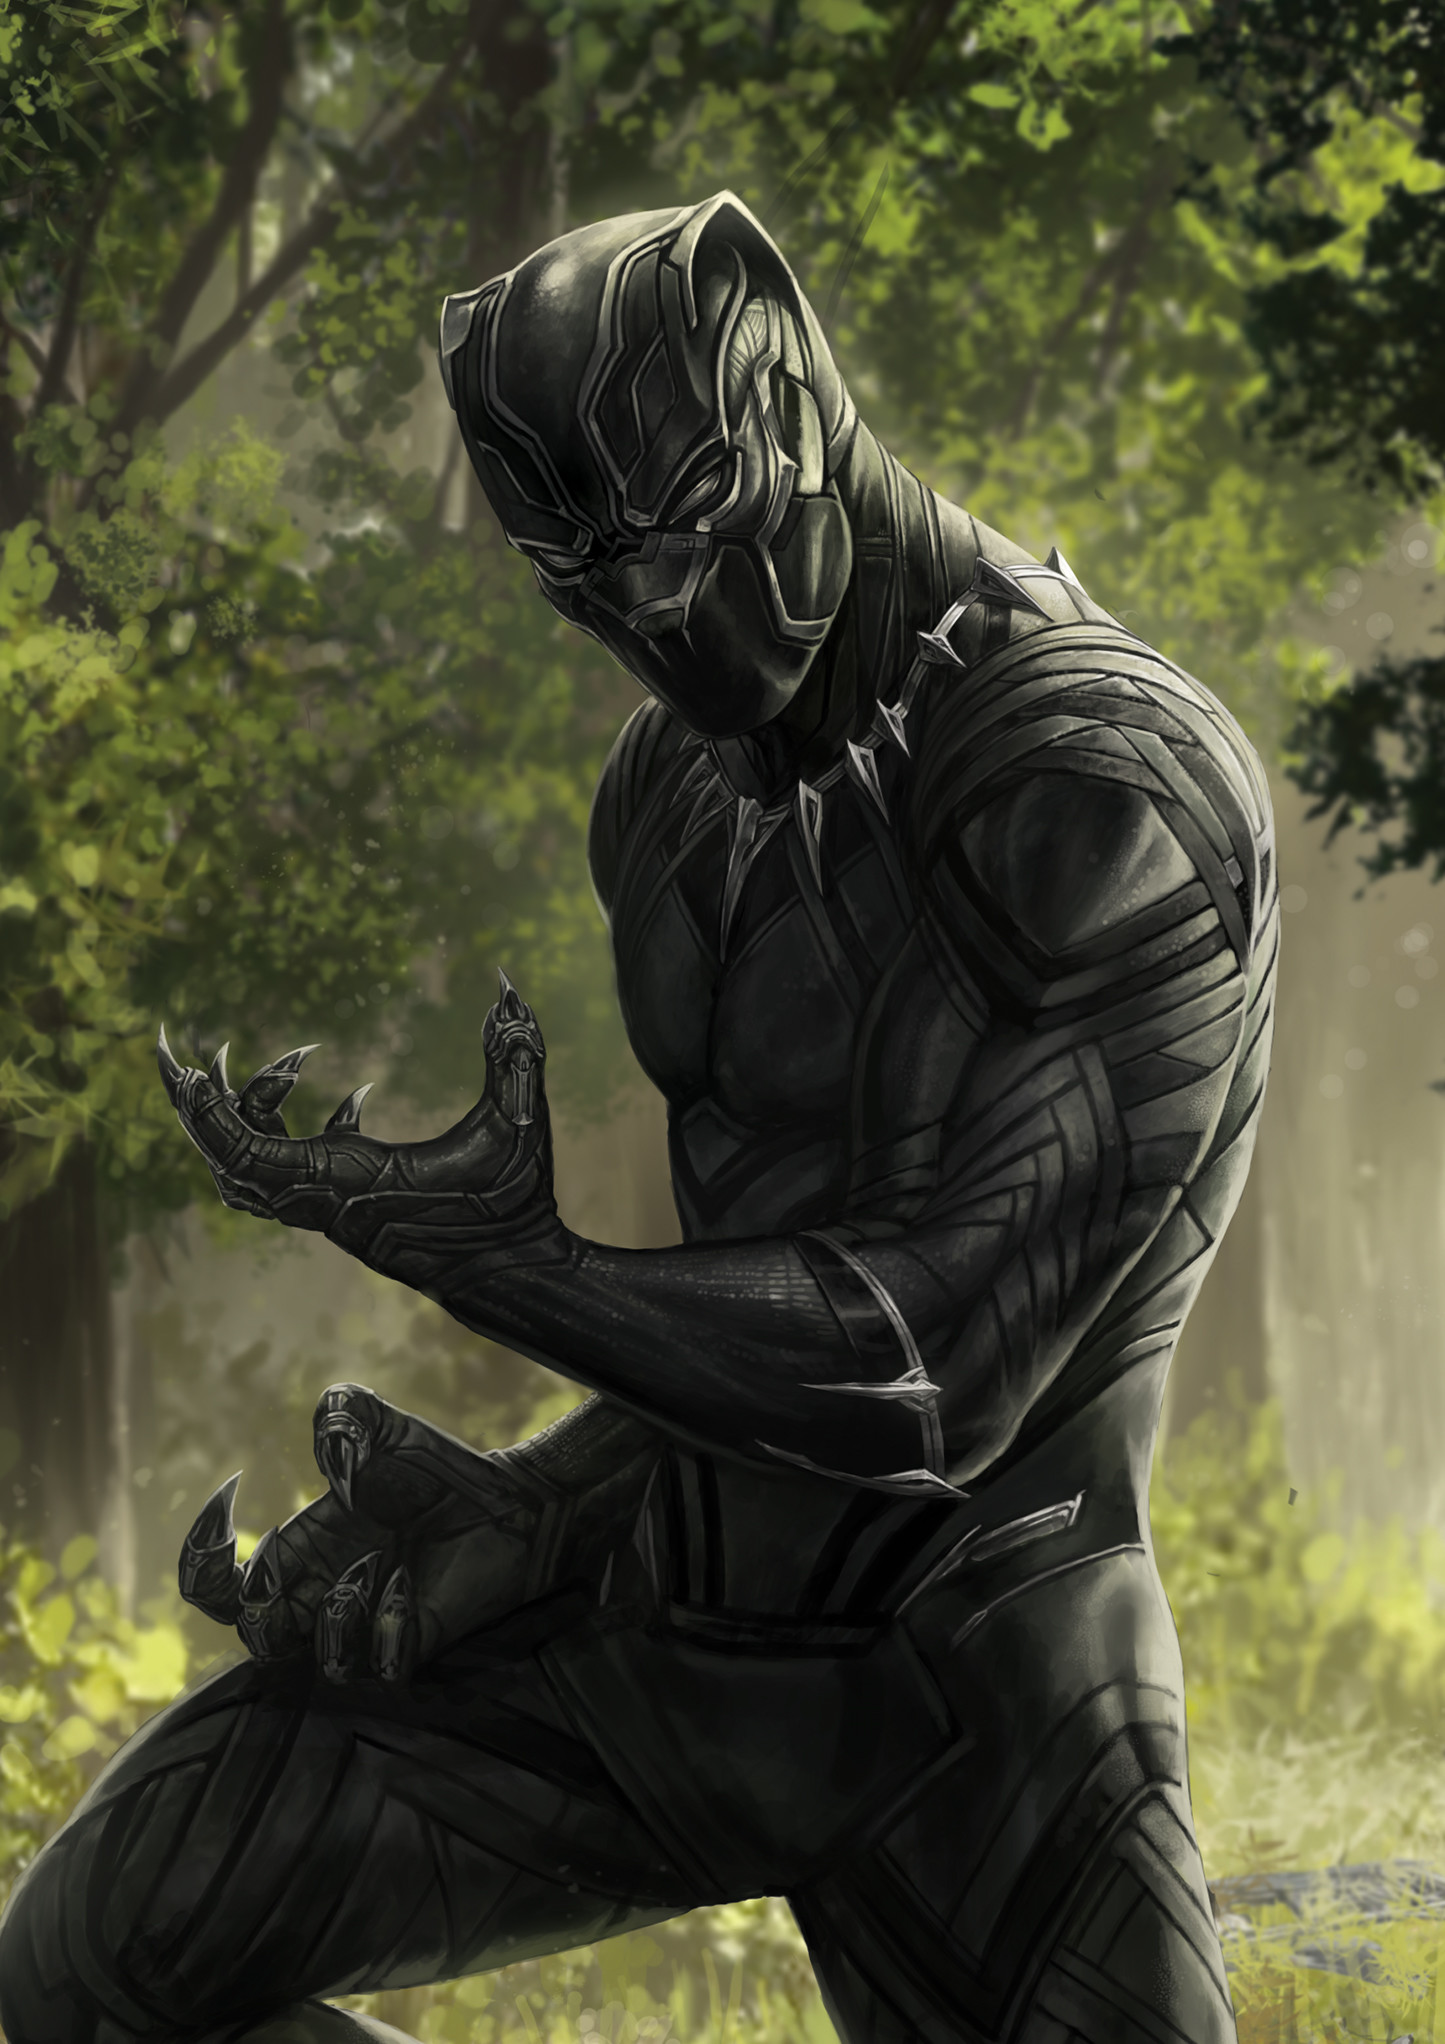 Black Panther Art by Yongsub Song